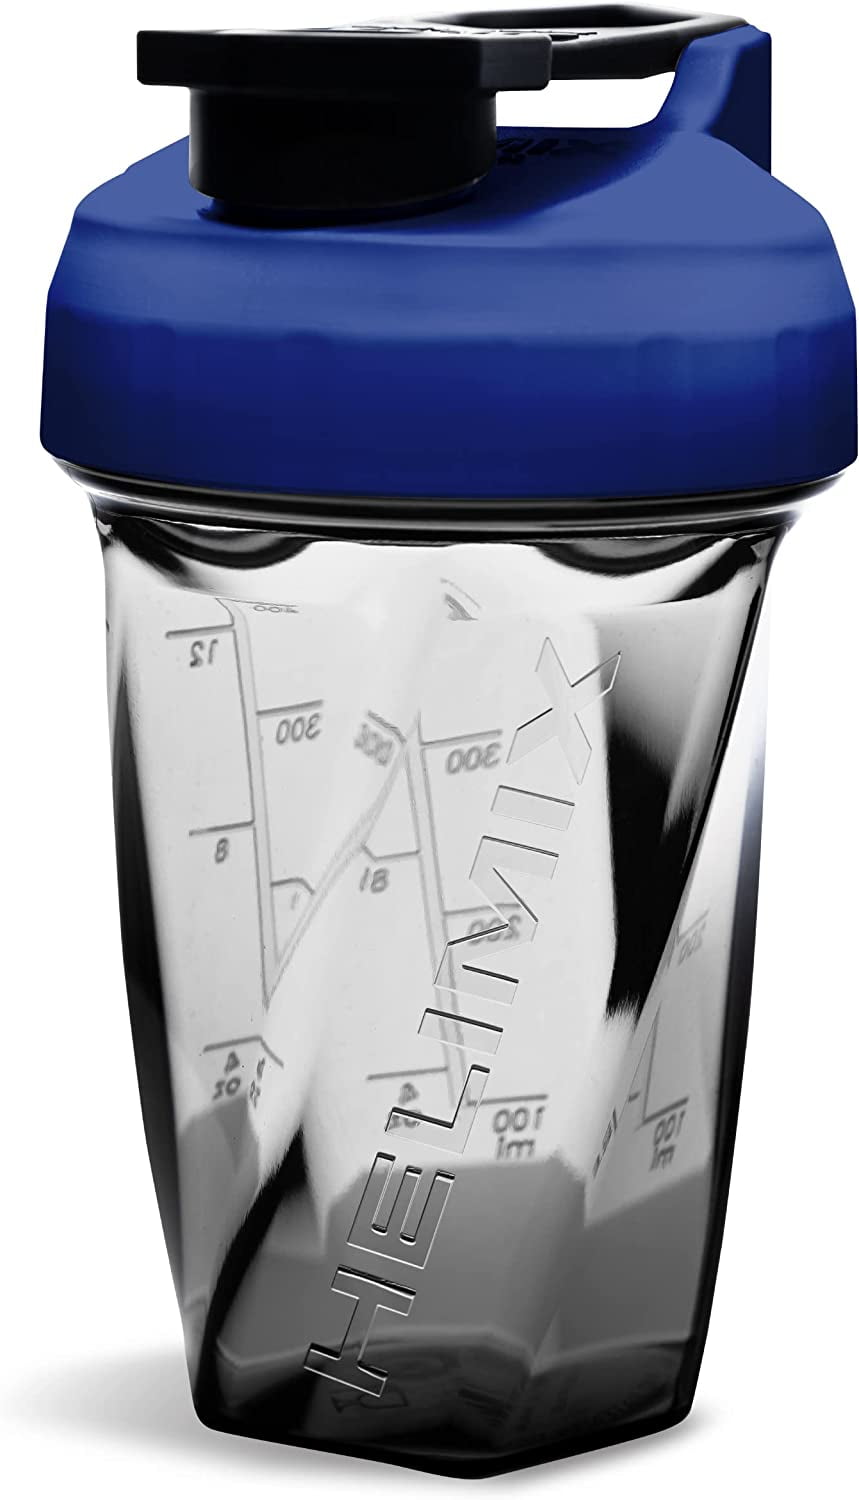 Transparent Shaker Bottle (10-pack)